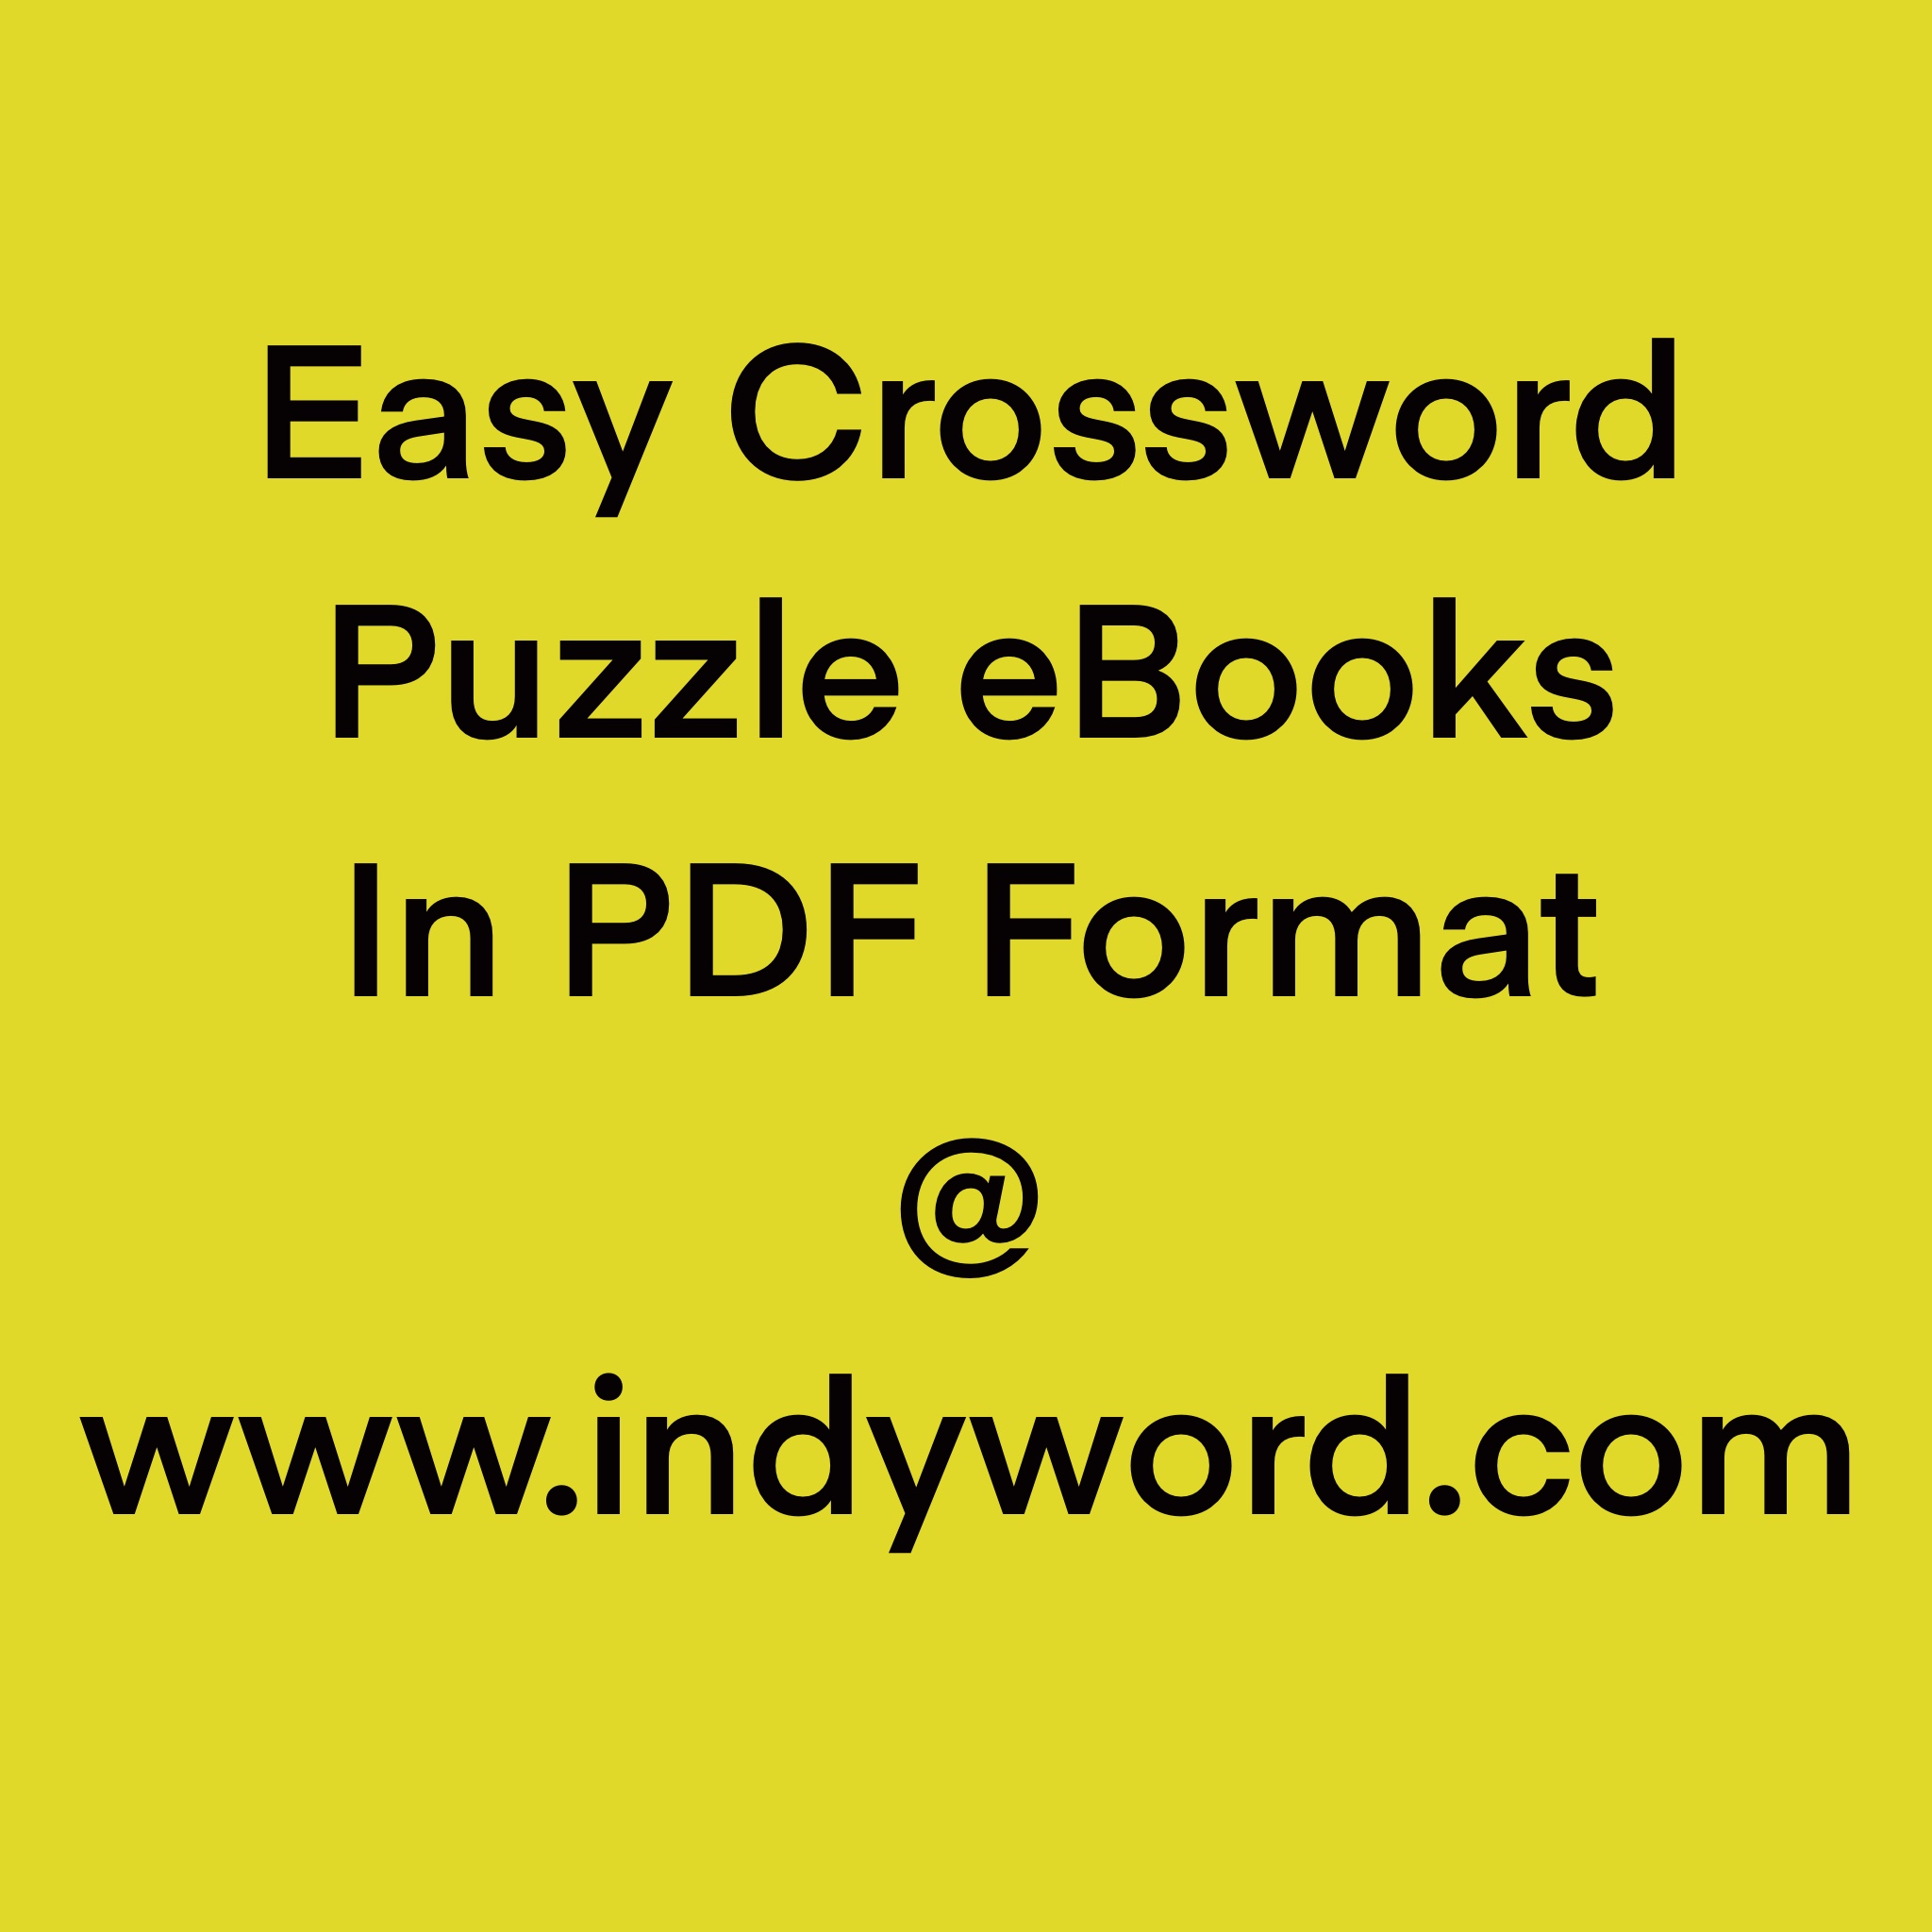 Easy Crossword Puzzle eBooks in PDF Format V2